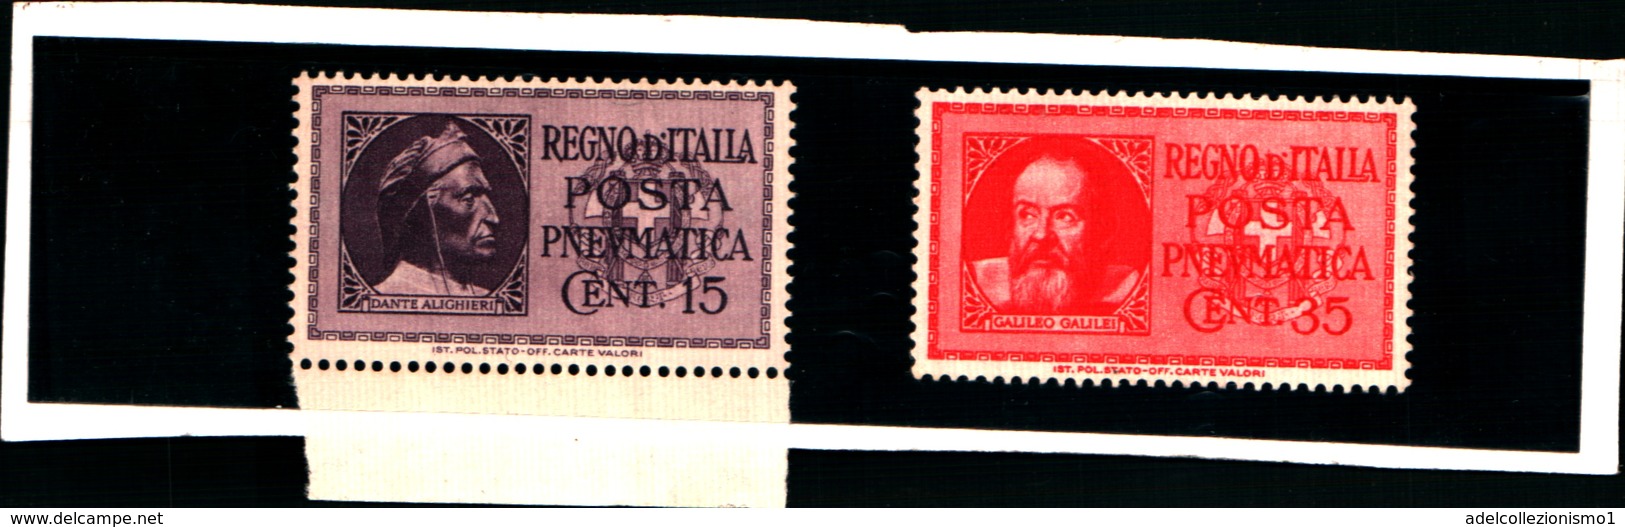 10014) ITALIA-Effigie Di Dante Alighieri E Galileo Galilei - POSTA PNEUMATICA - 29 Marzo 1933-SERIE MNH** - Pneumatic Mail